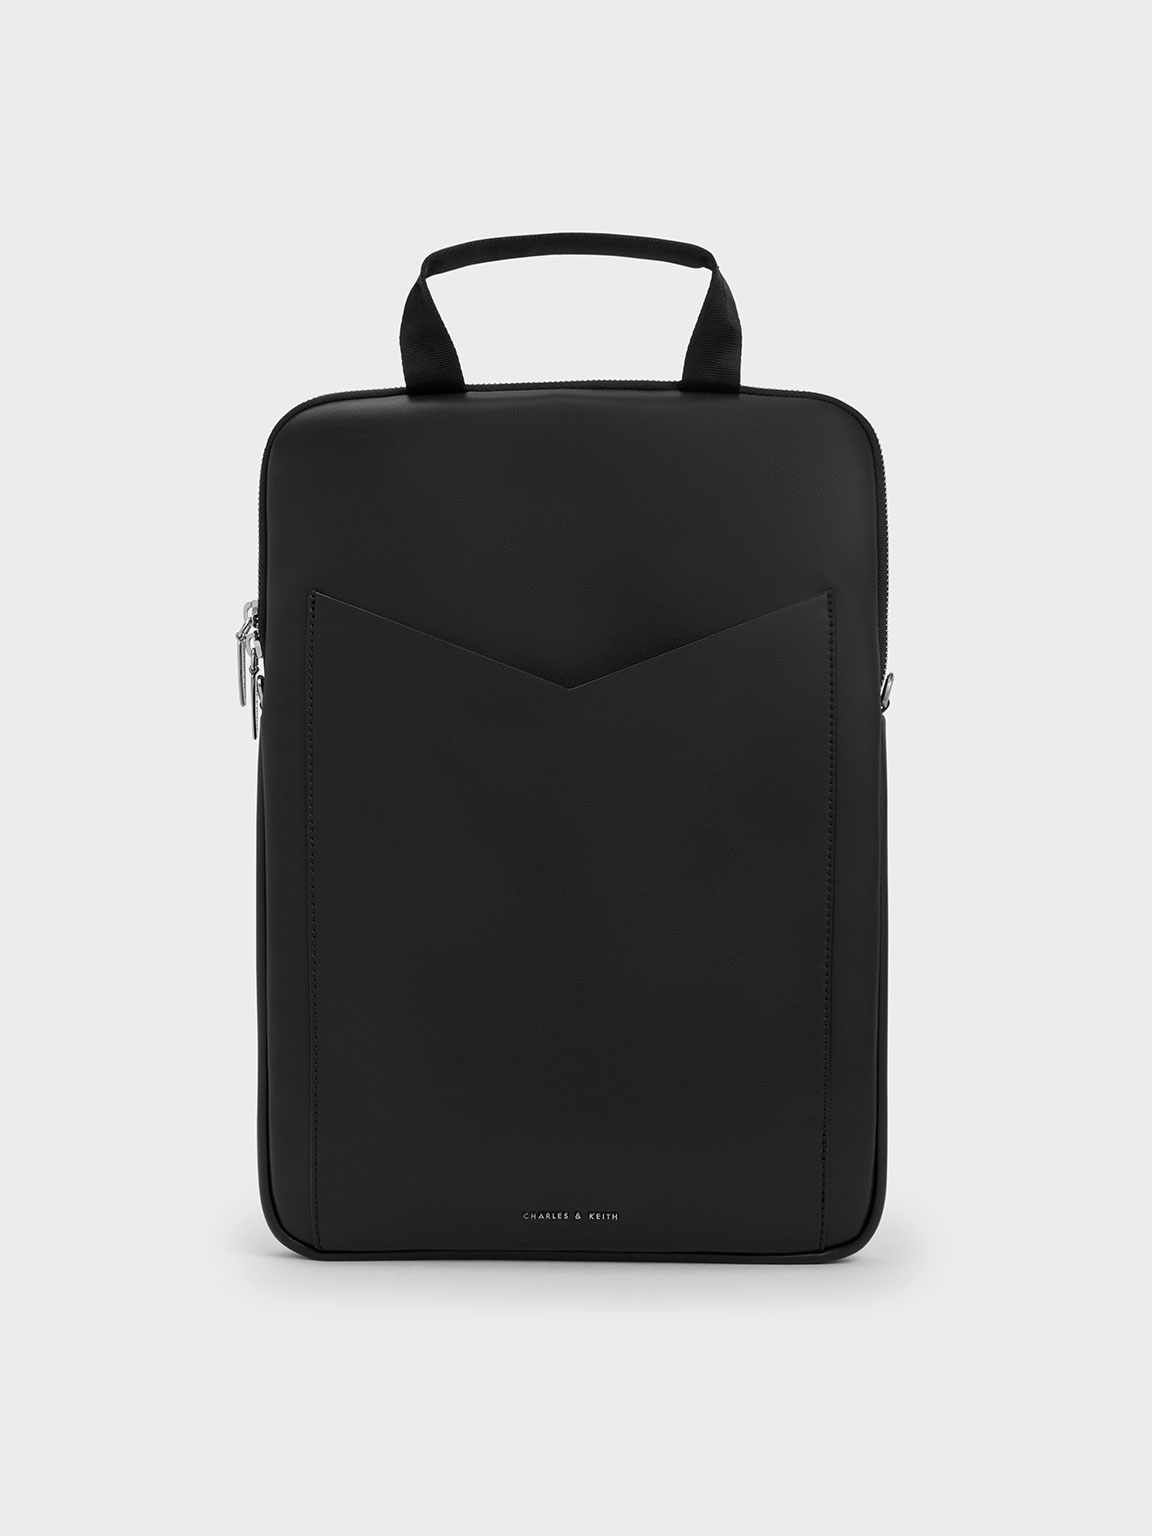 Charles & Keith Gaia Laptop Bag In Black